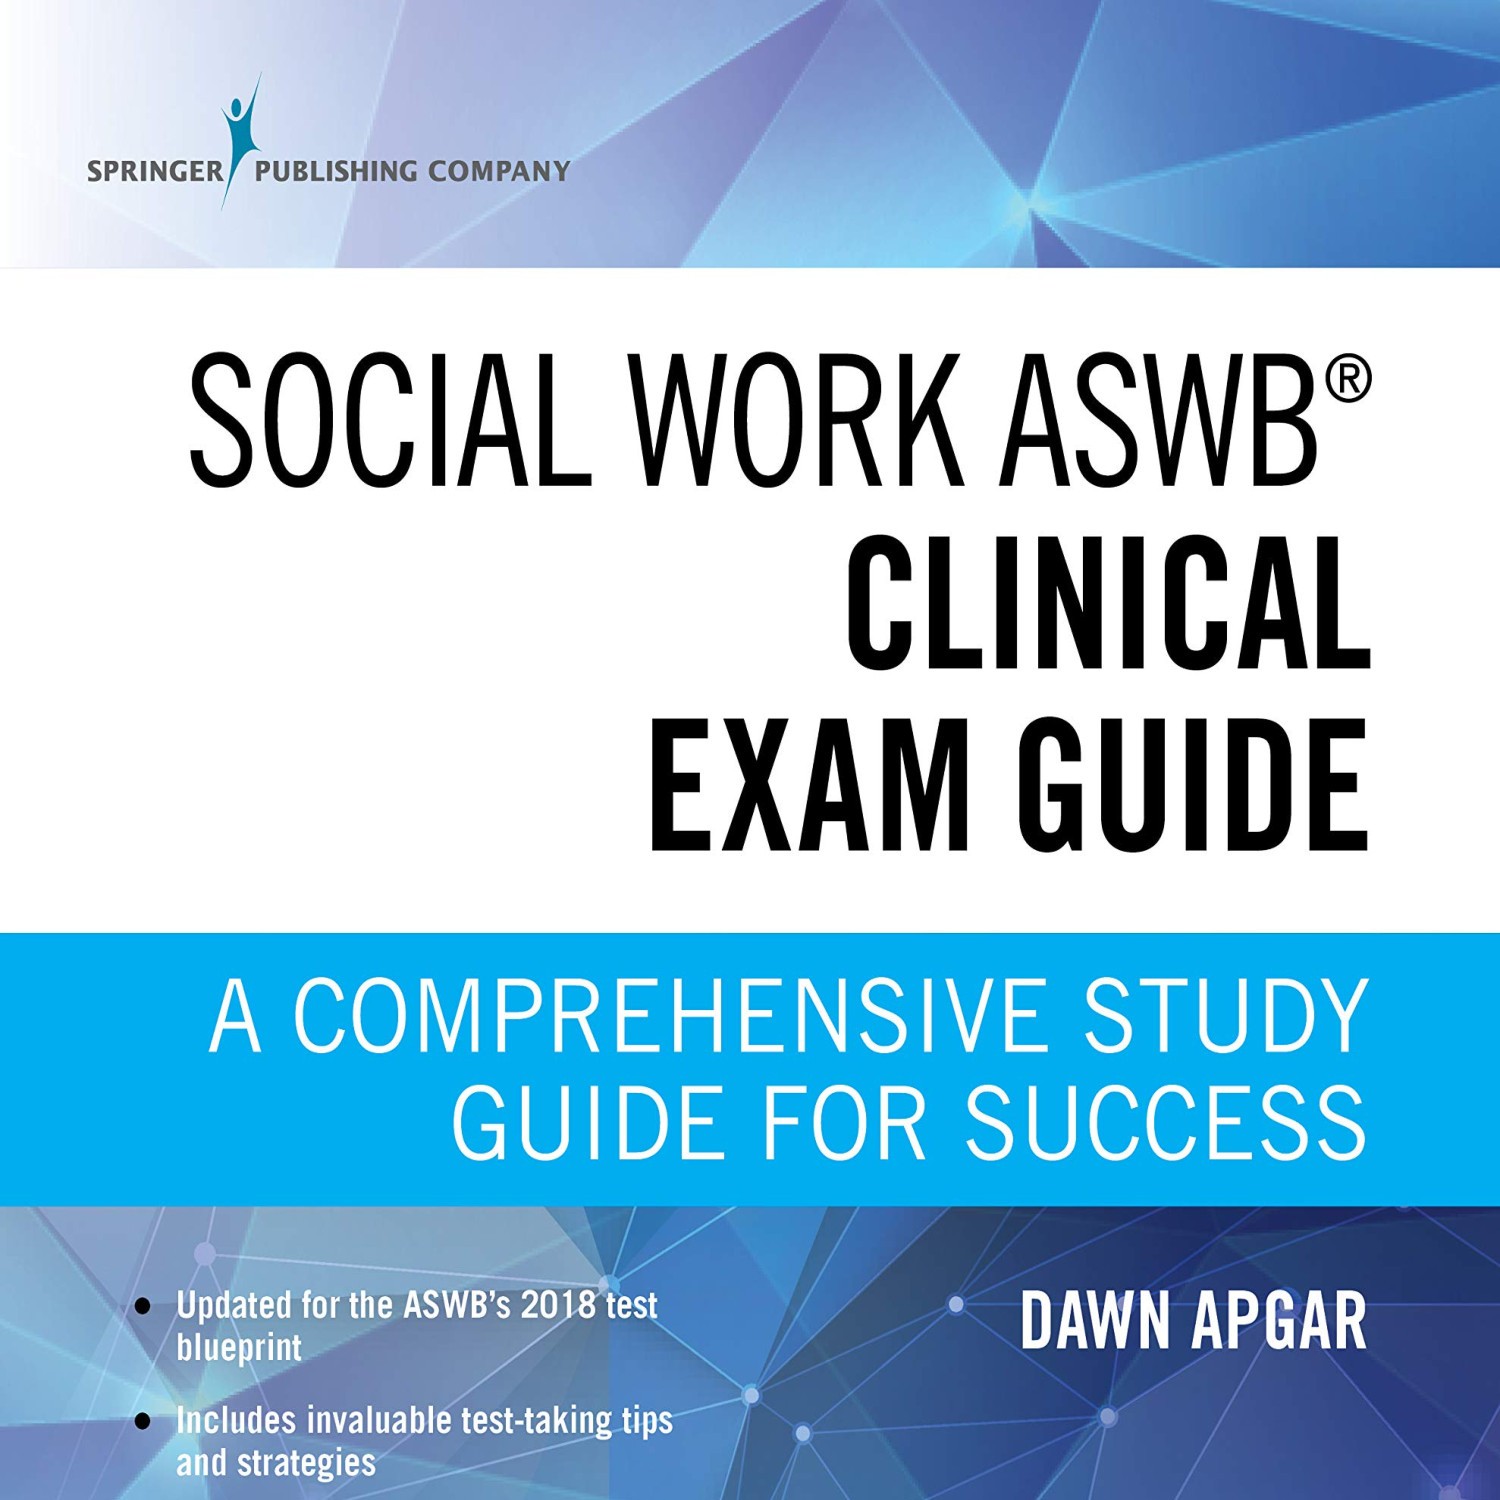 BOOS Social Work ASWB Clinical Exam Guide Second Edition A